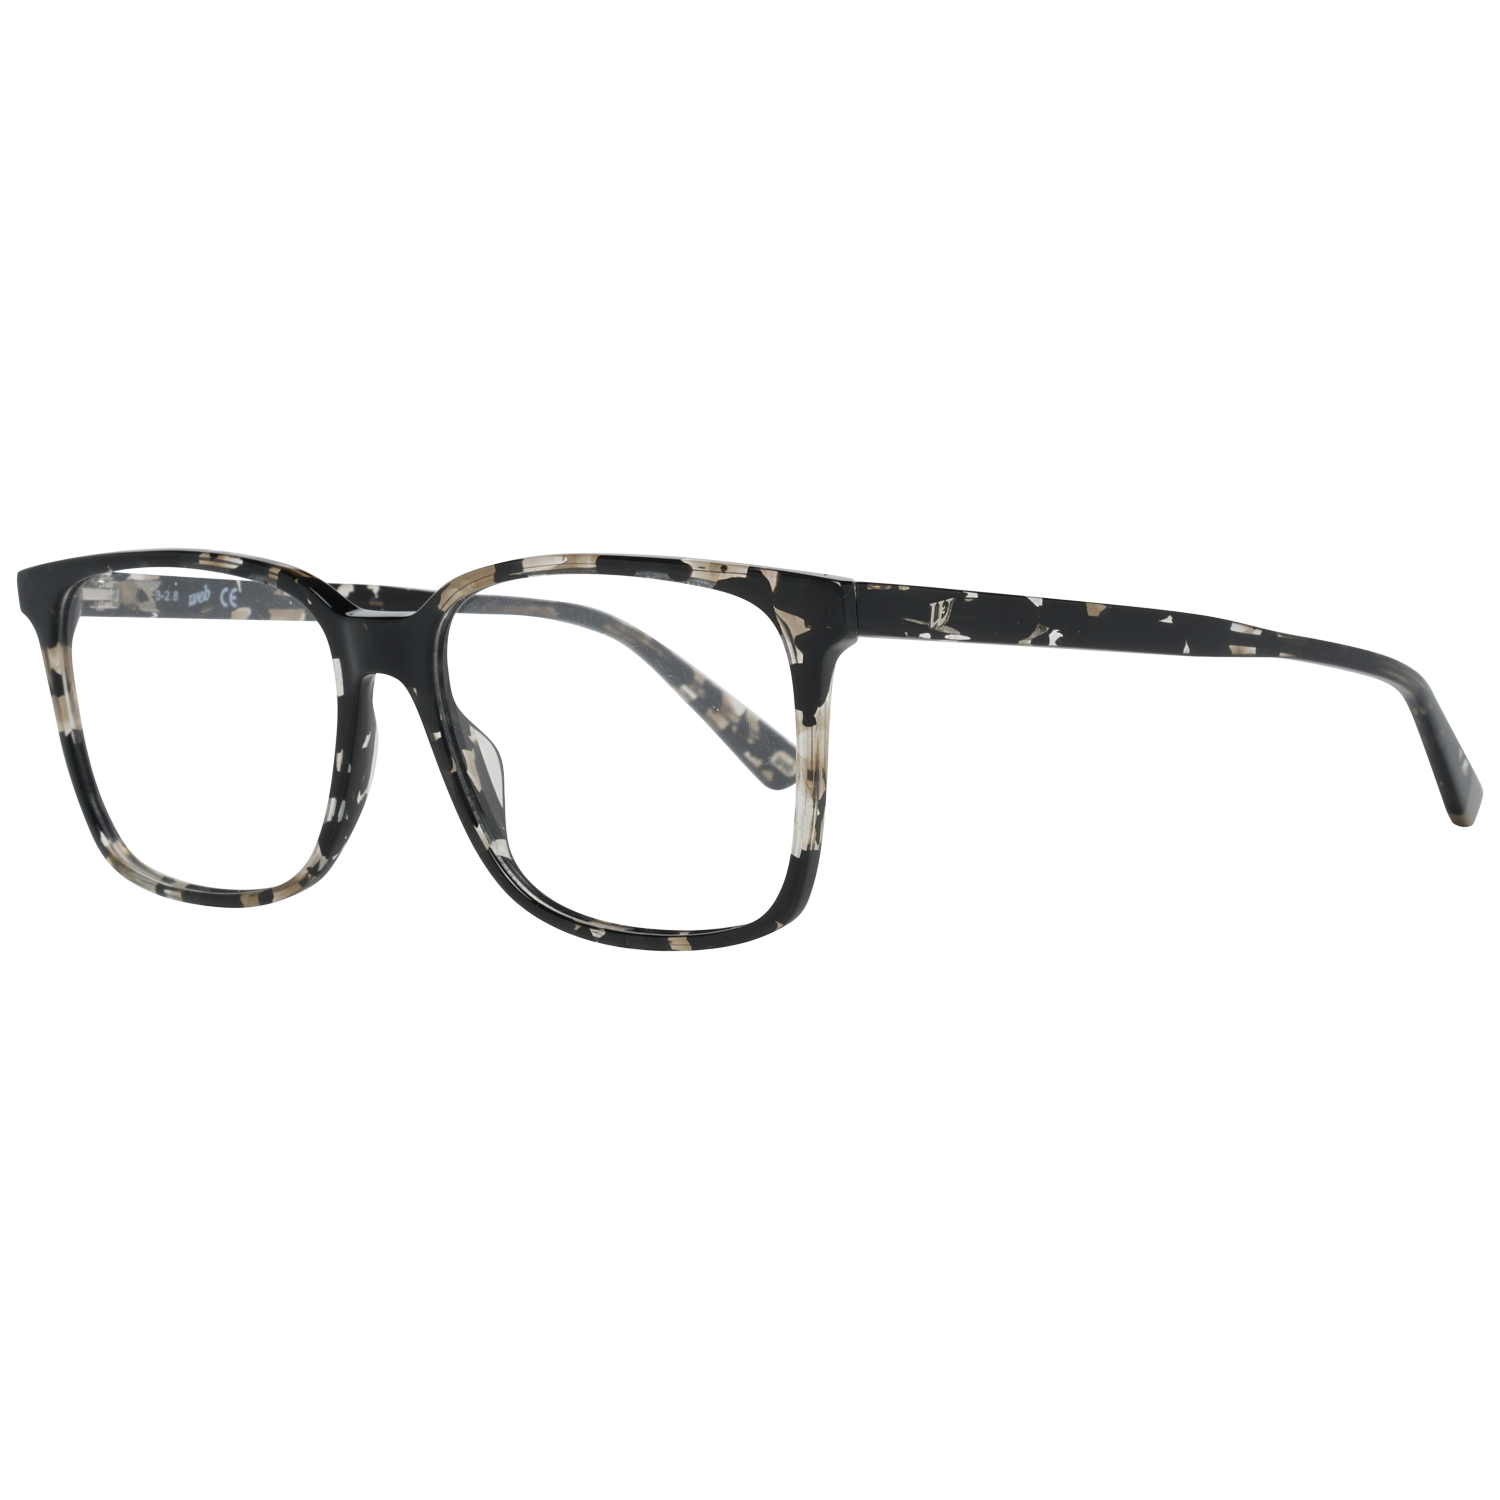 Web Frames Web Prescription Glasses Optical Frame WE5292 055 54 Eyeglasses Eyewear UK USA Australia 